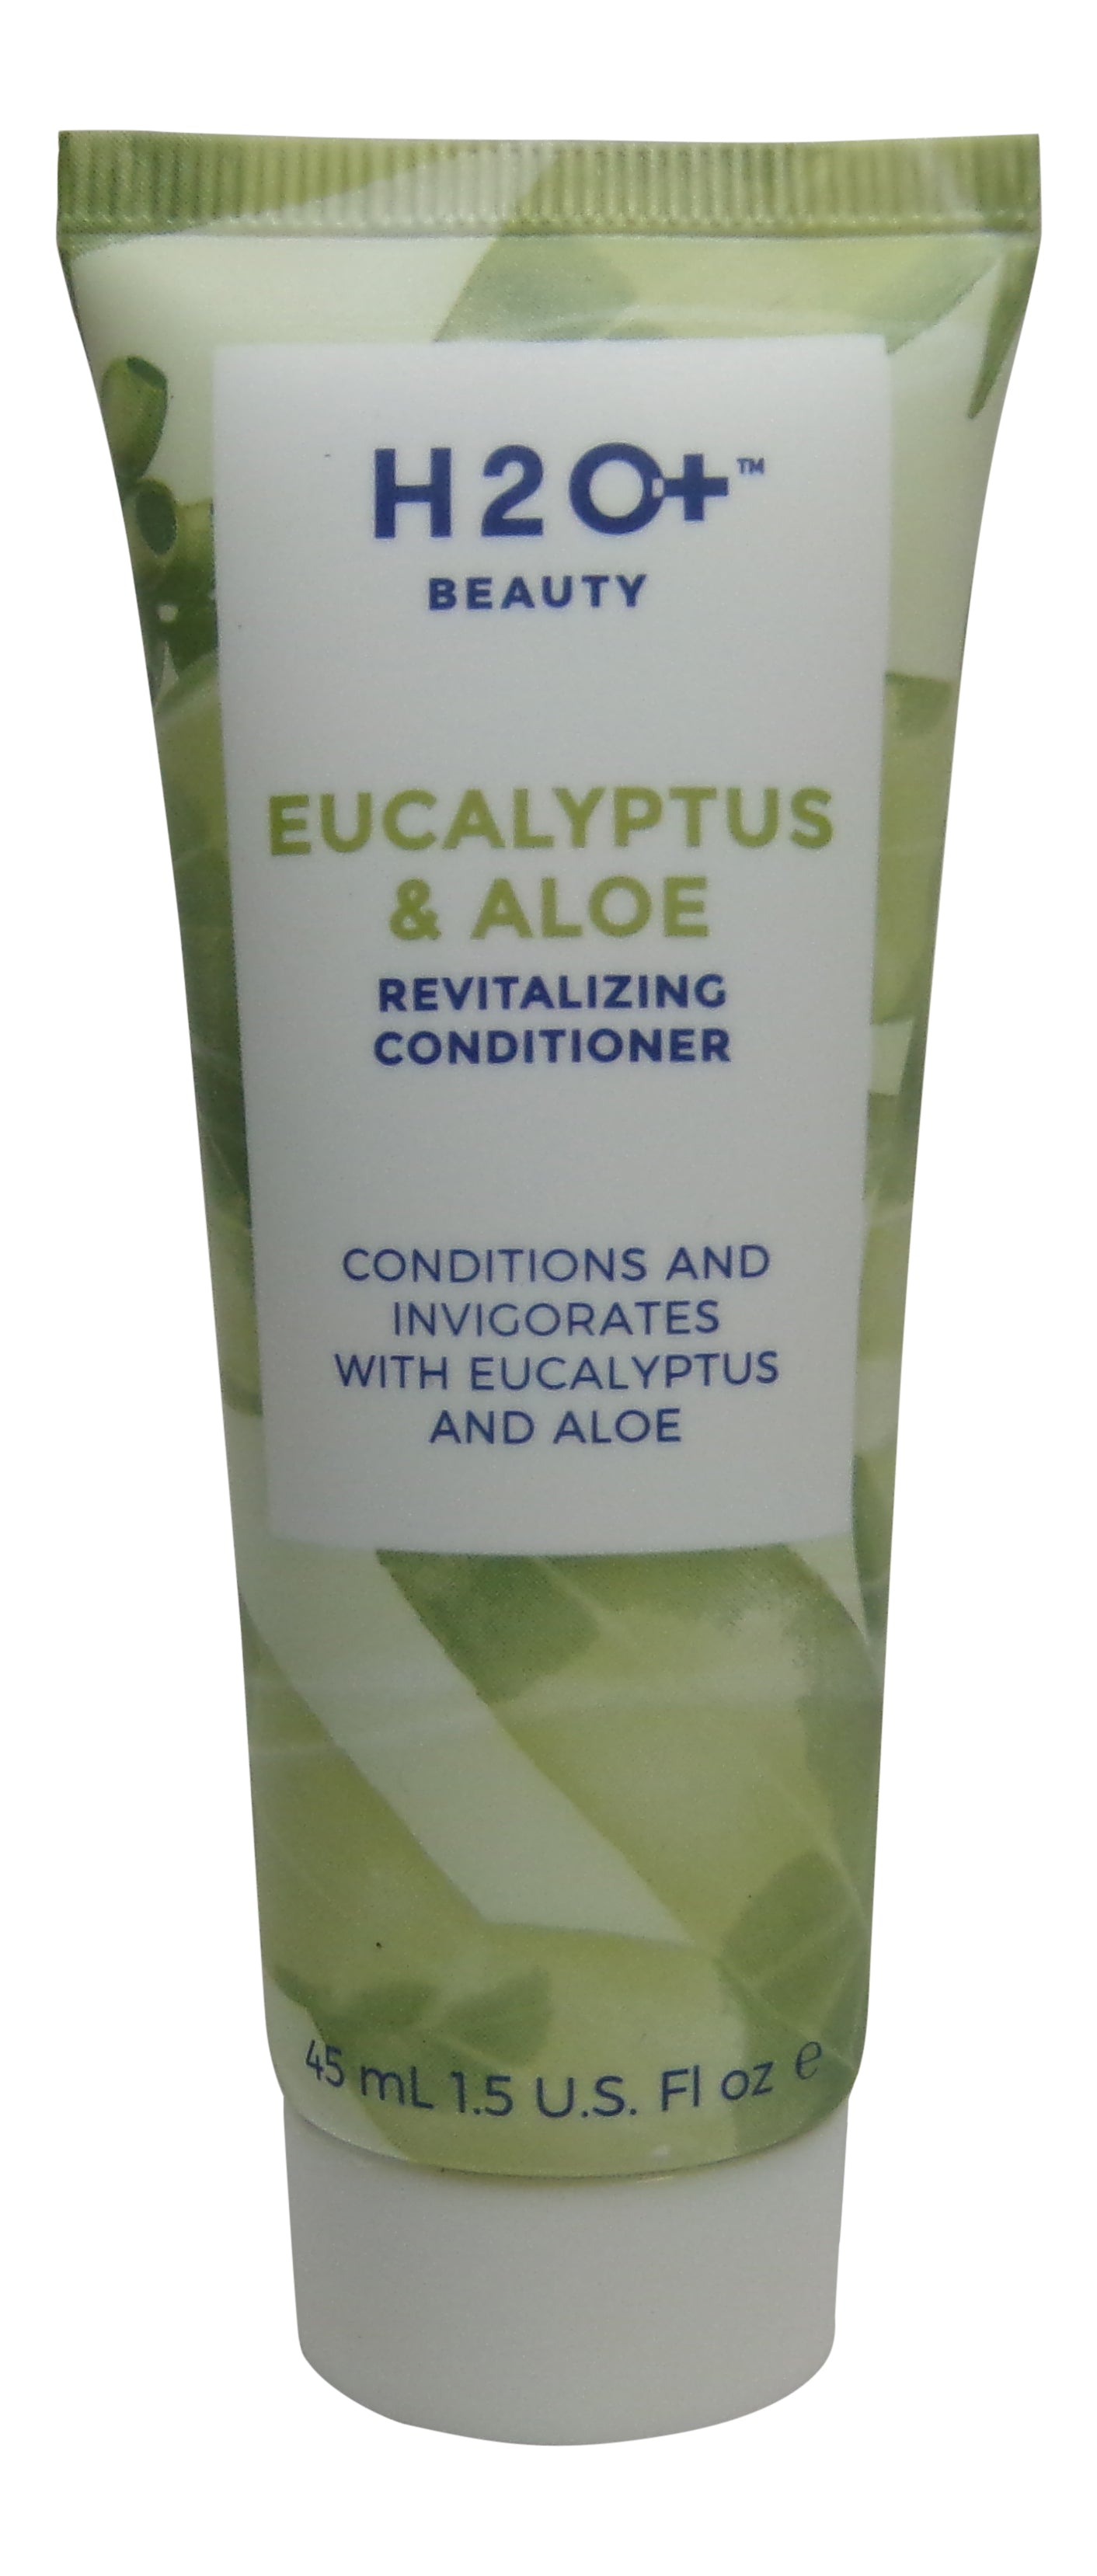 H2O Plus Eucalyptus & Aloe Shampoo & Conditioner lot of 4 (2 of each) 1.5oz bottles.